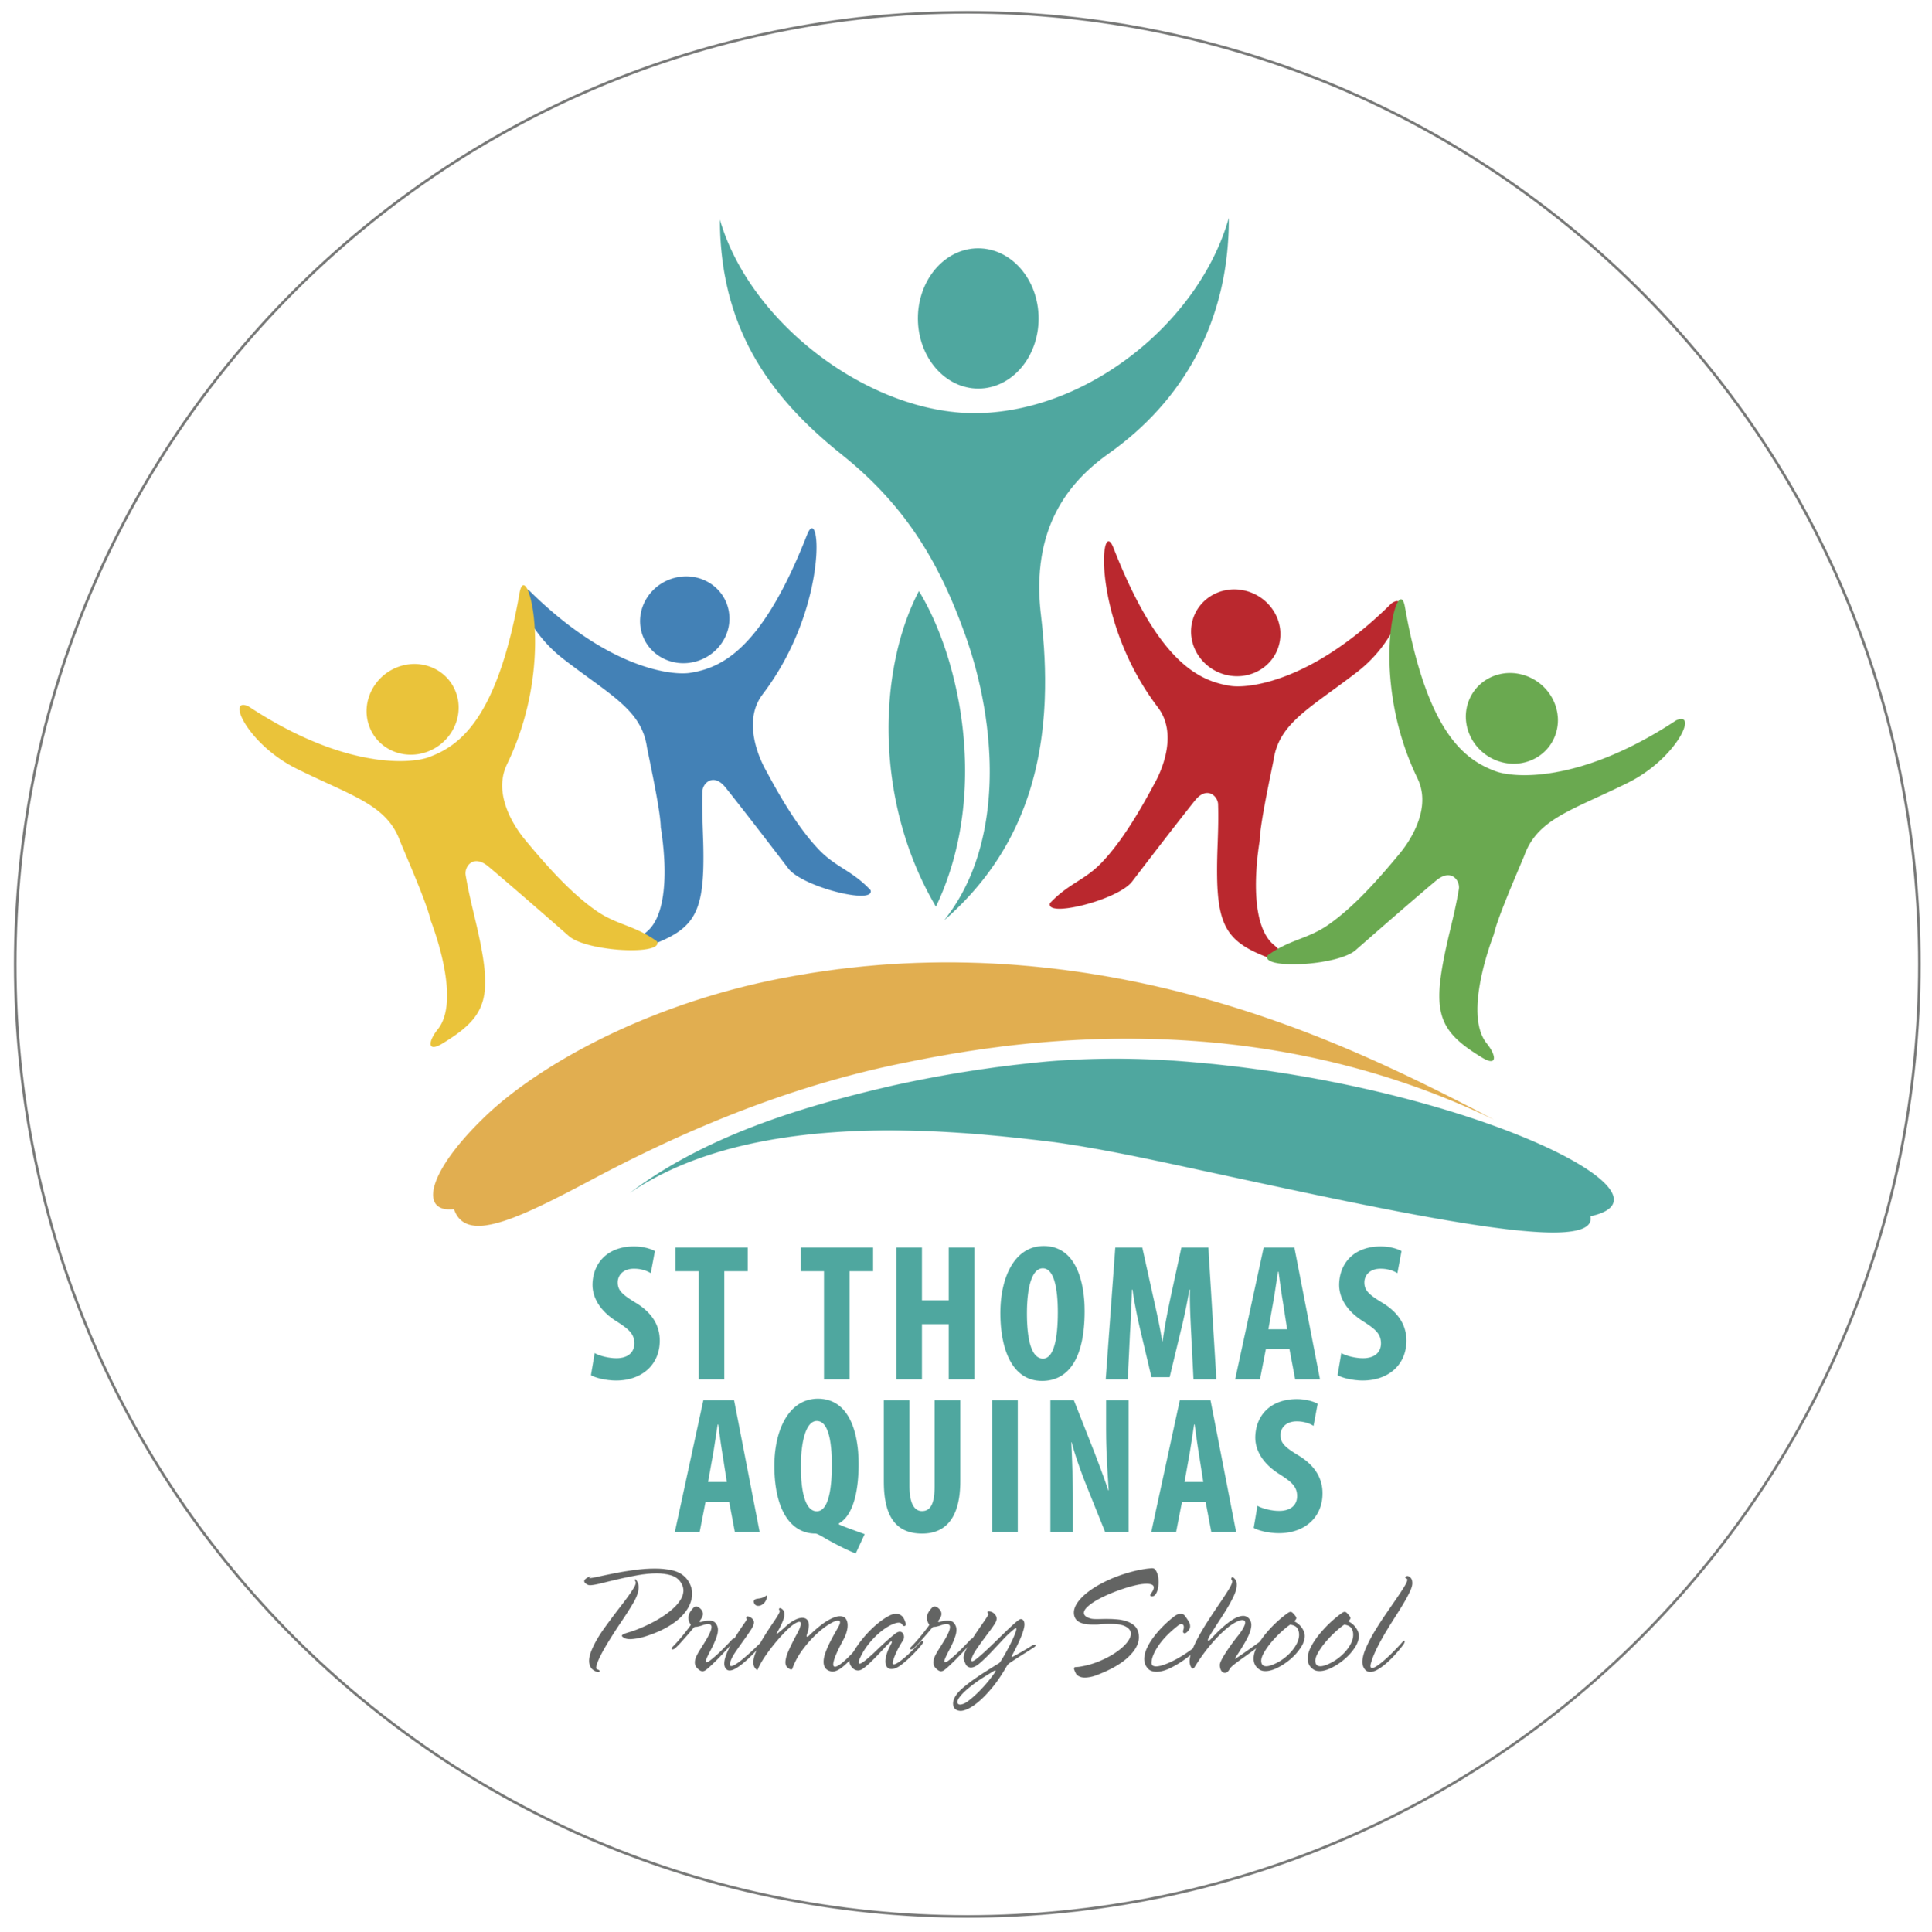 St Thomas Aquinas Primary School